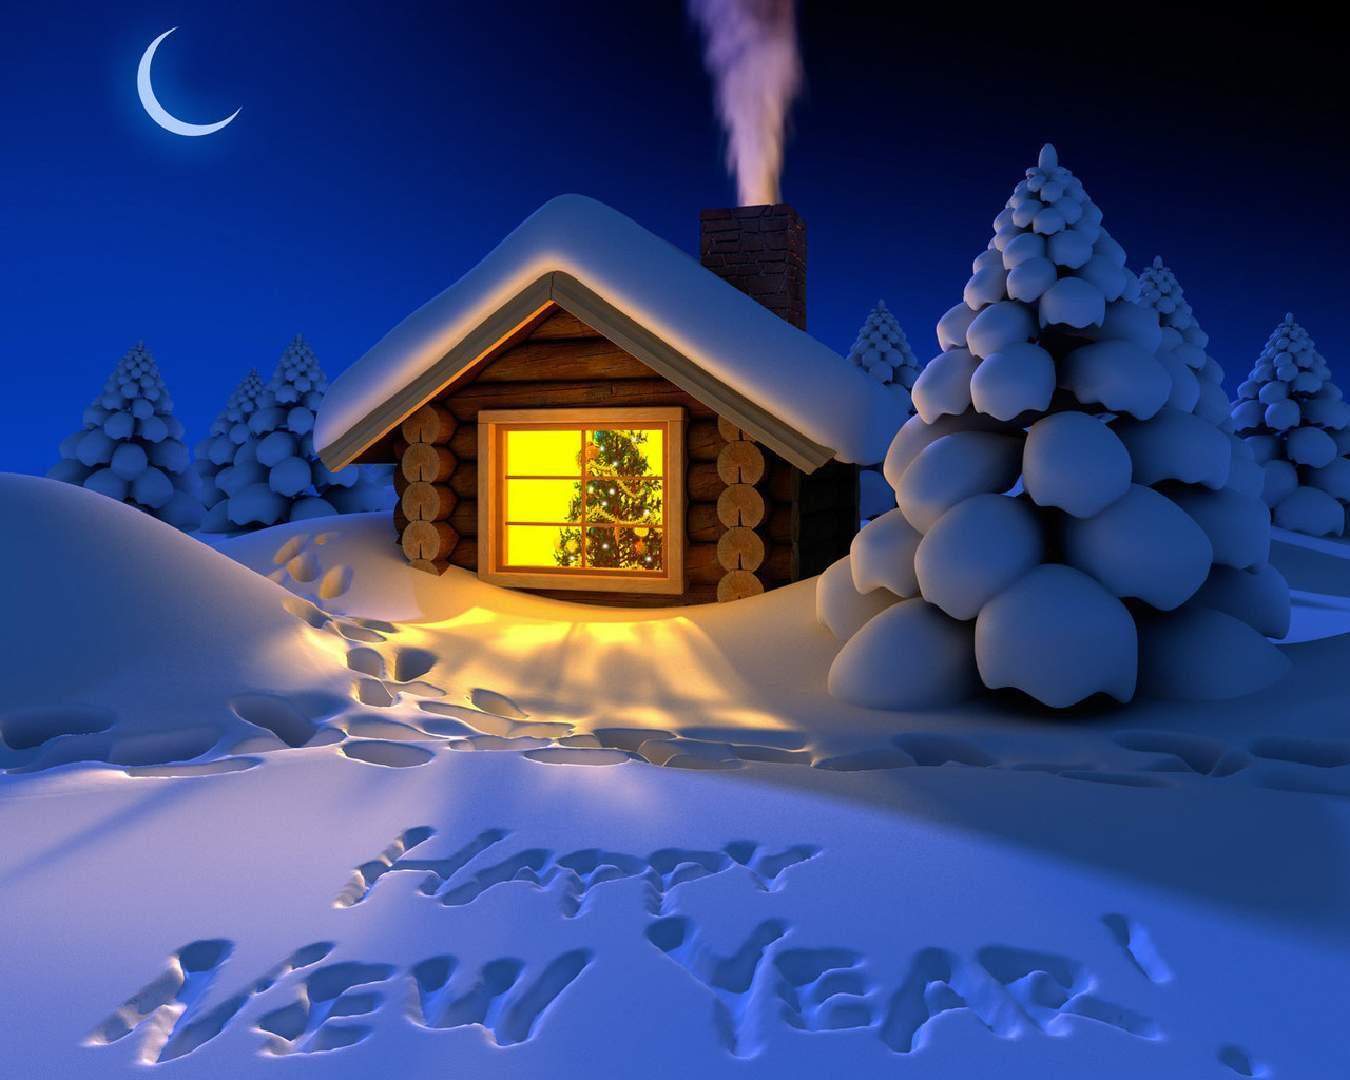 Happy New Year night photograph free desktop background